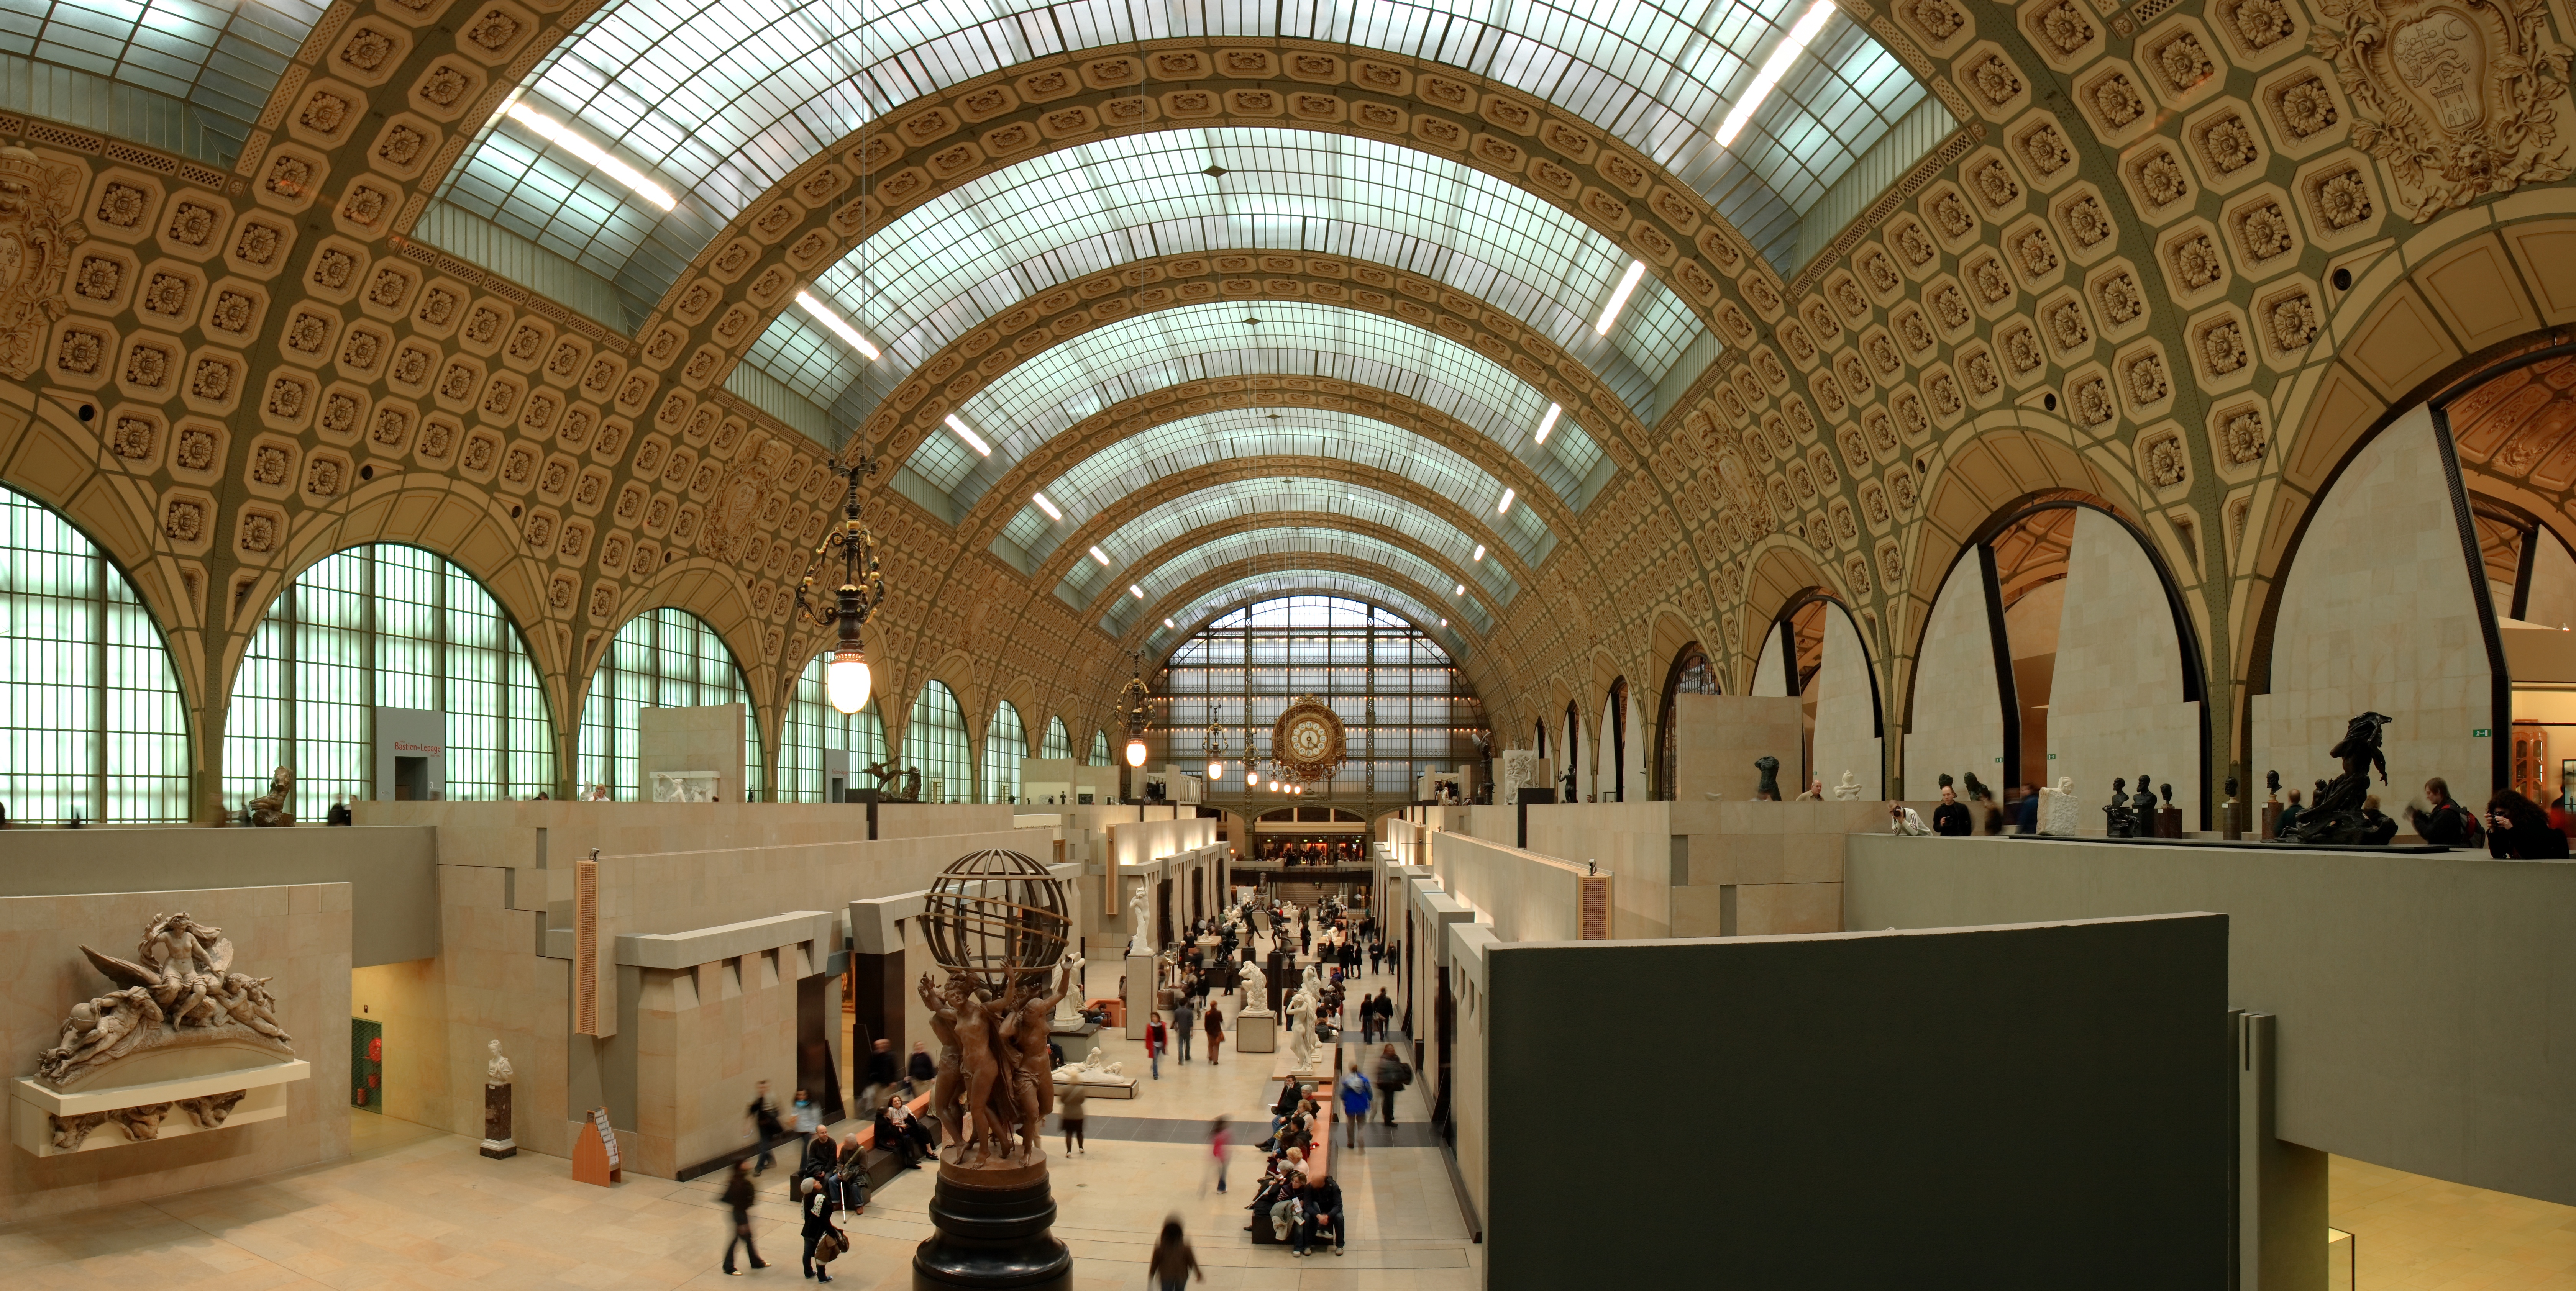 D'Orsay Museum in Paris, France